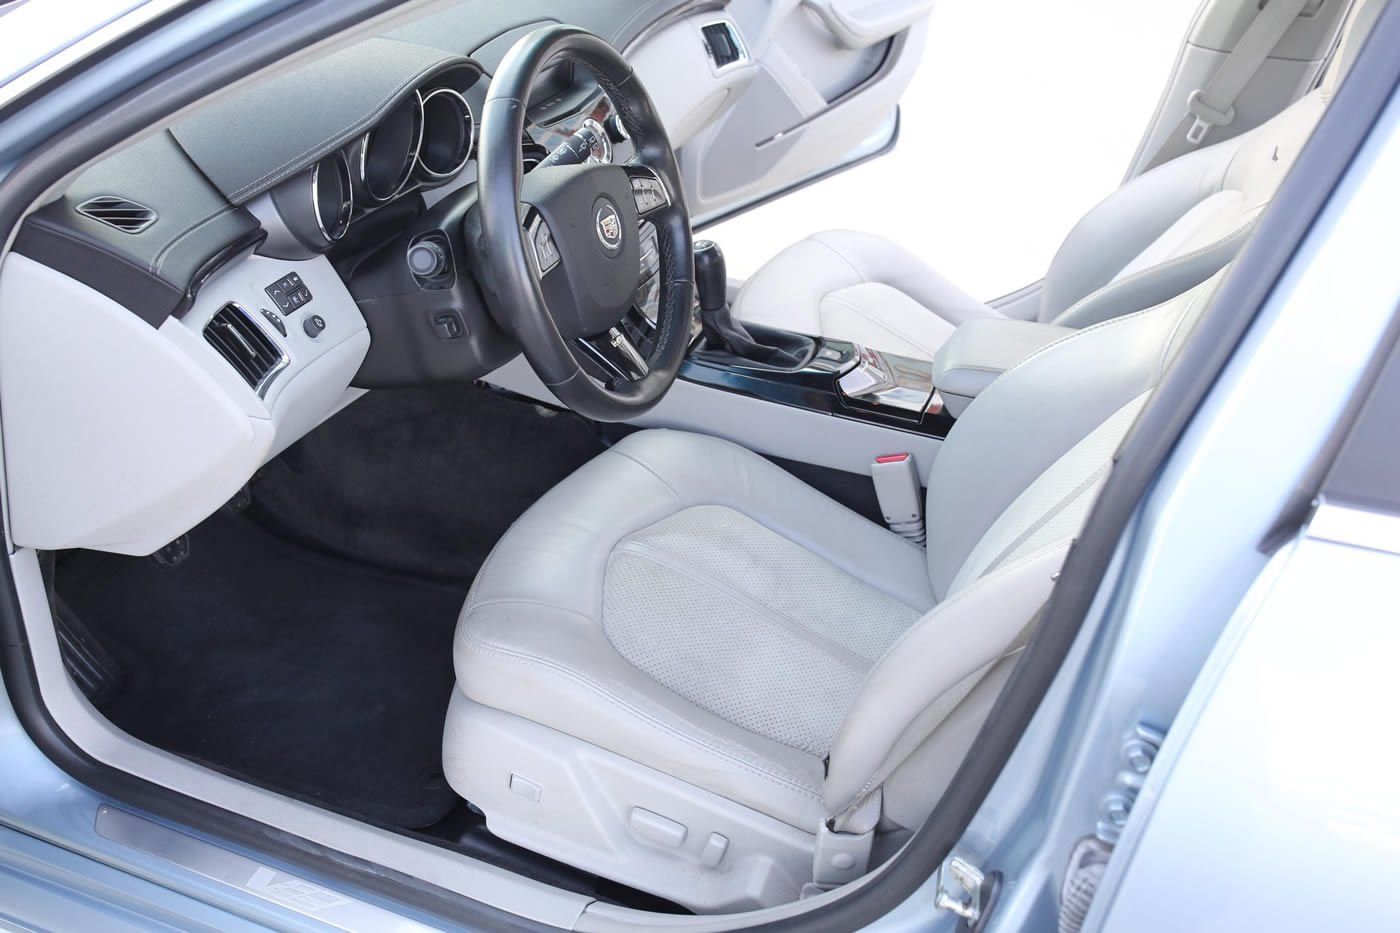 2014 Cadillac CTS-V Wagon 6-Speed in Glacier Blue Metallic